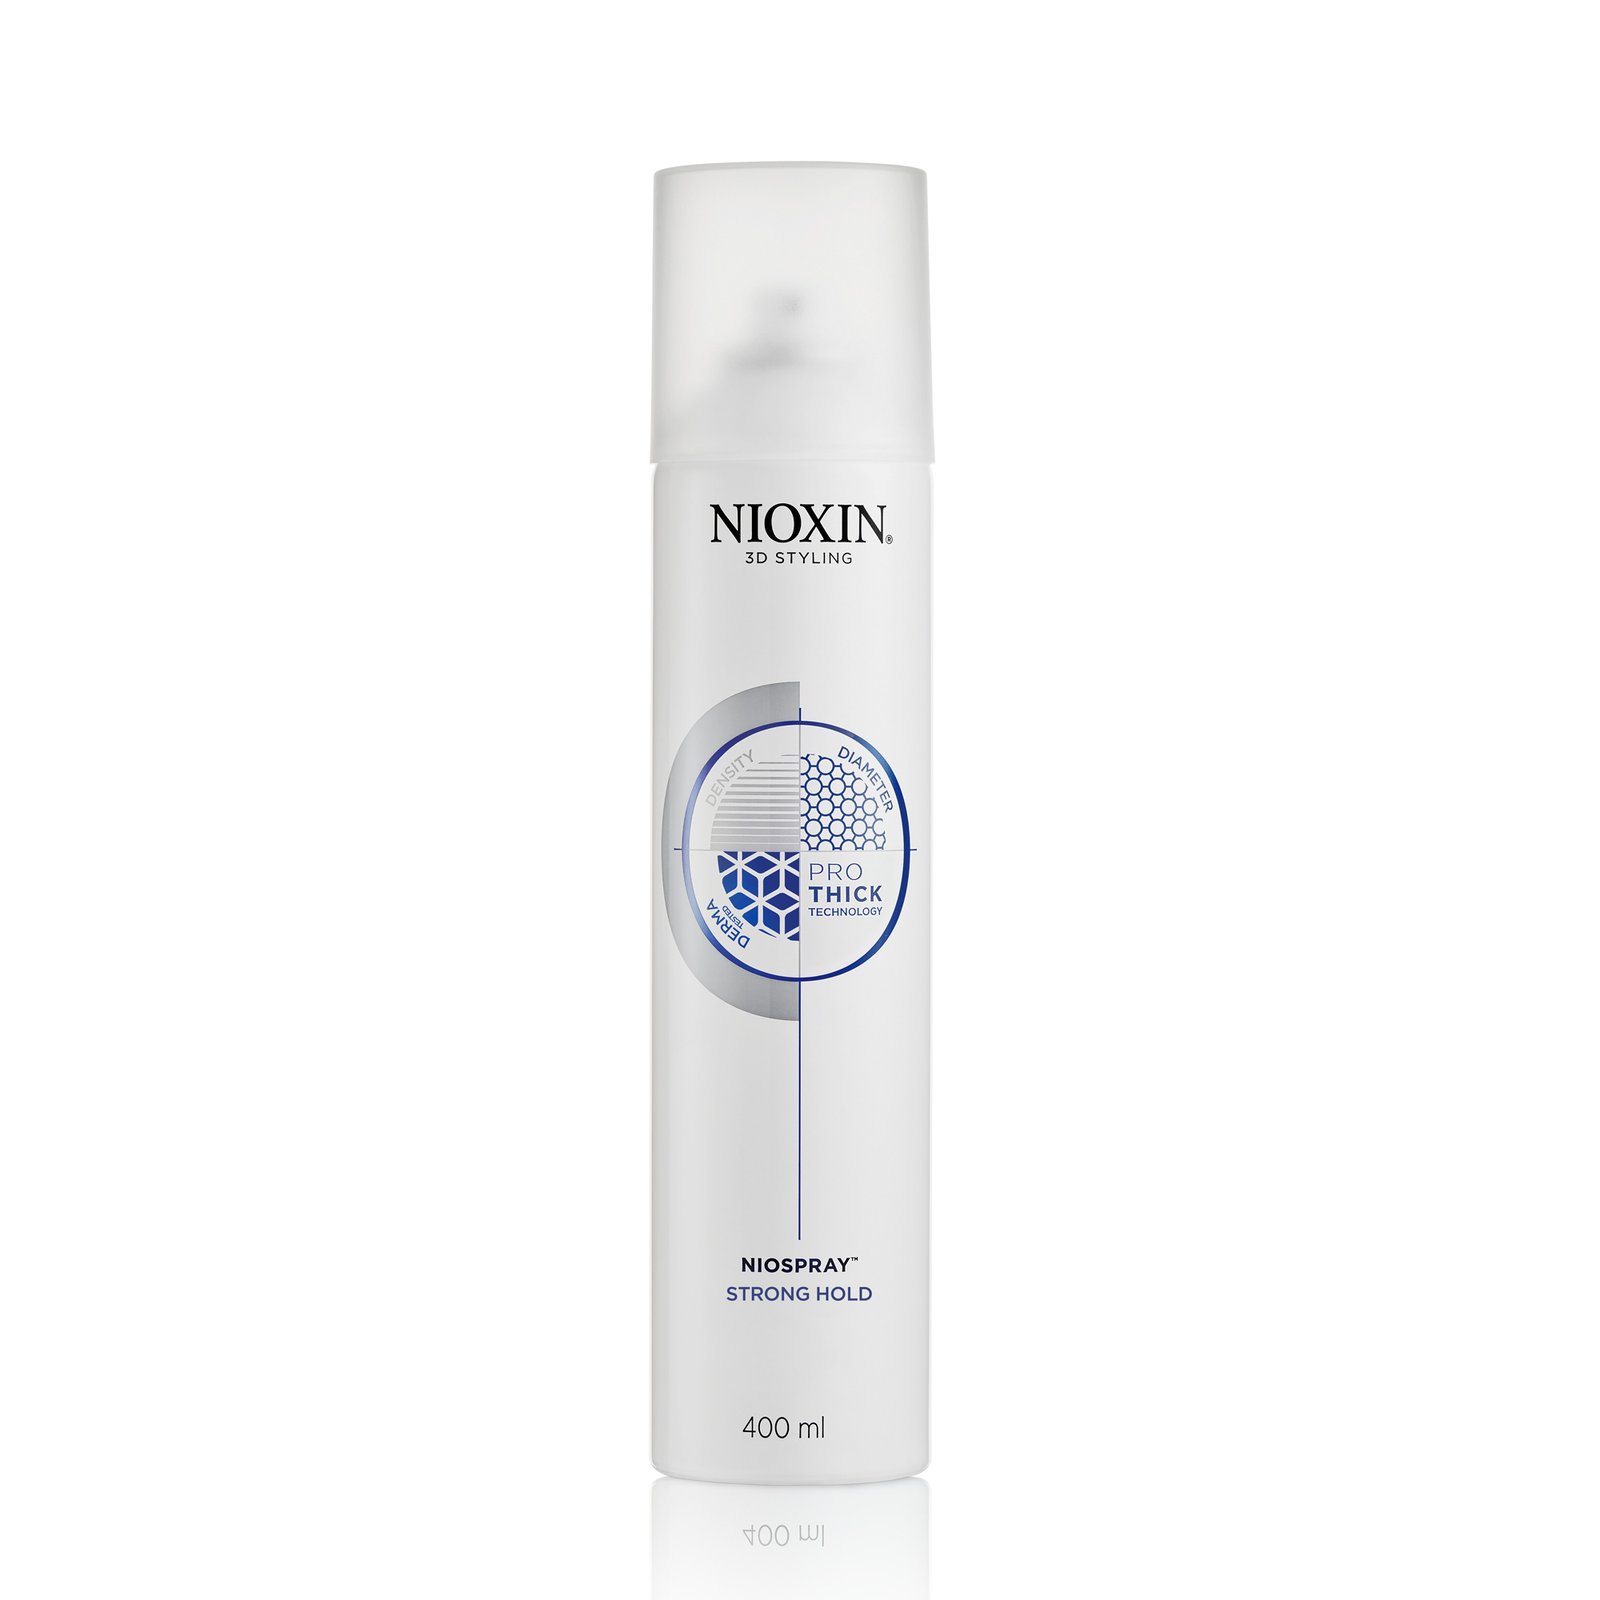 NIOXIN Niospray Extra Hold 400 ml